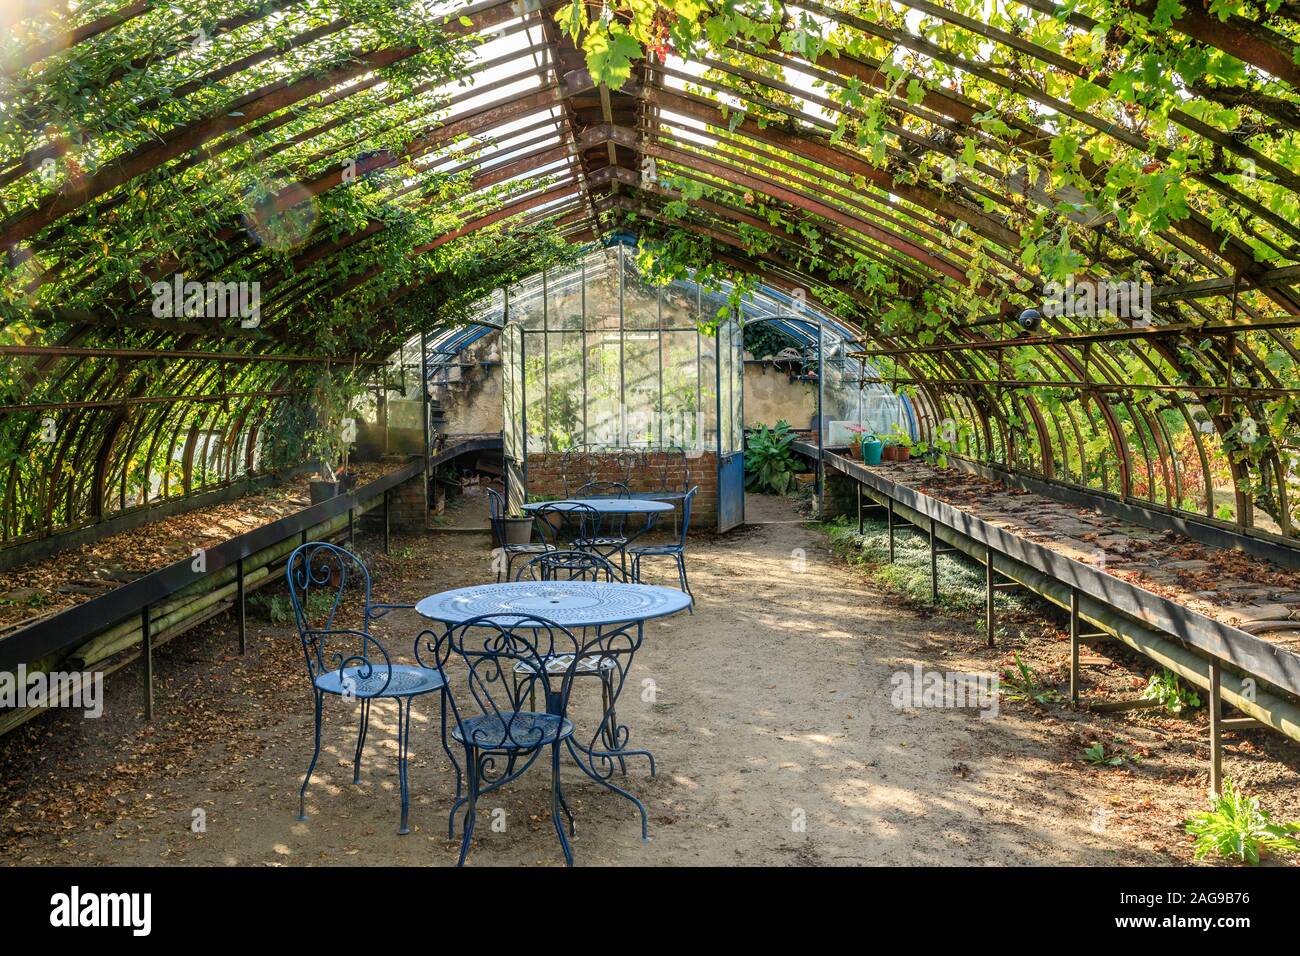 France, Loiret, La Bussiere, Chateau de La Bussiere Park and Gardens, old greenhouse covered with vines and roses // France, Loiret (45), La Bussière, Stock Photo